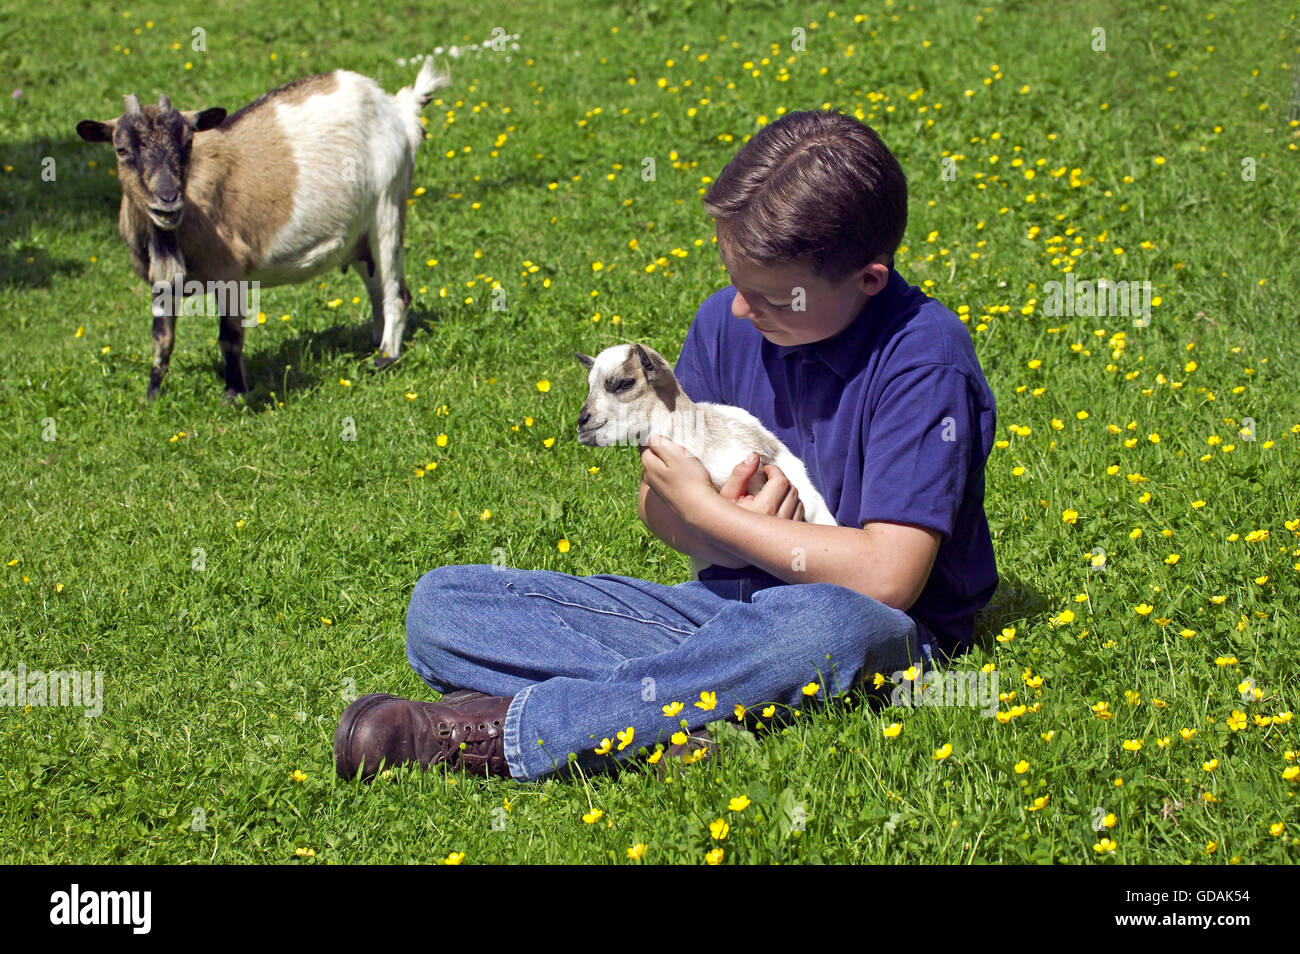 Niño sosteniendo una joven cabra pigmeo Foto de stock